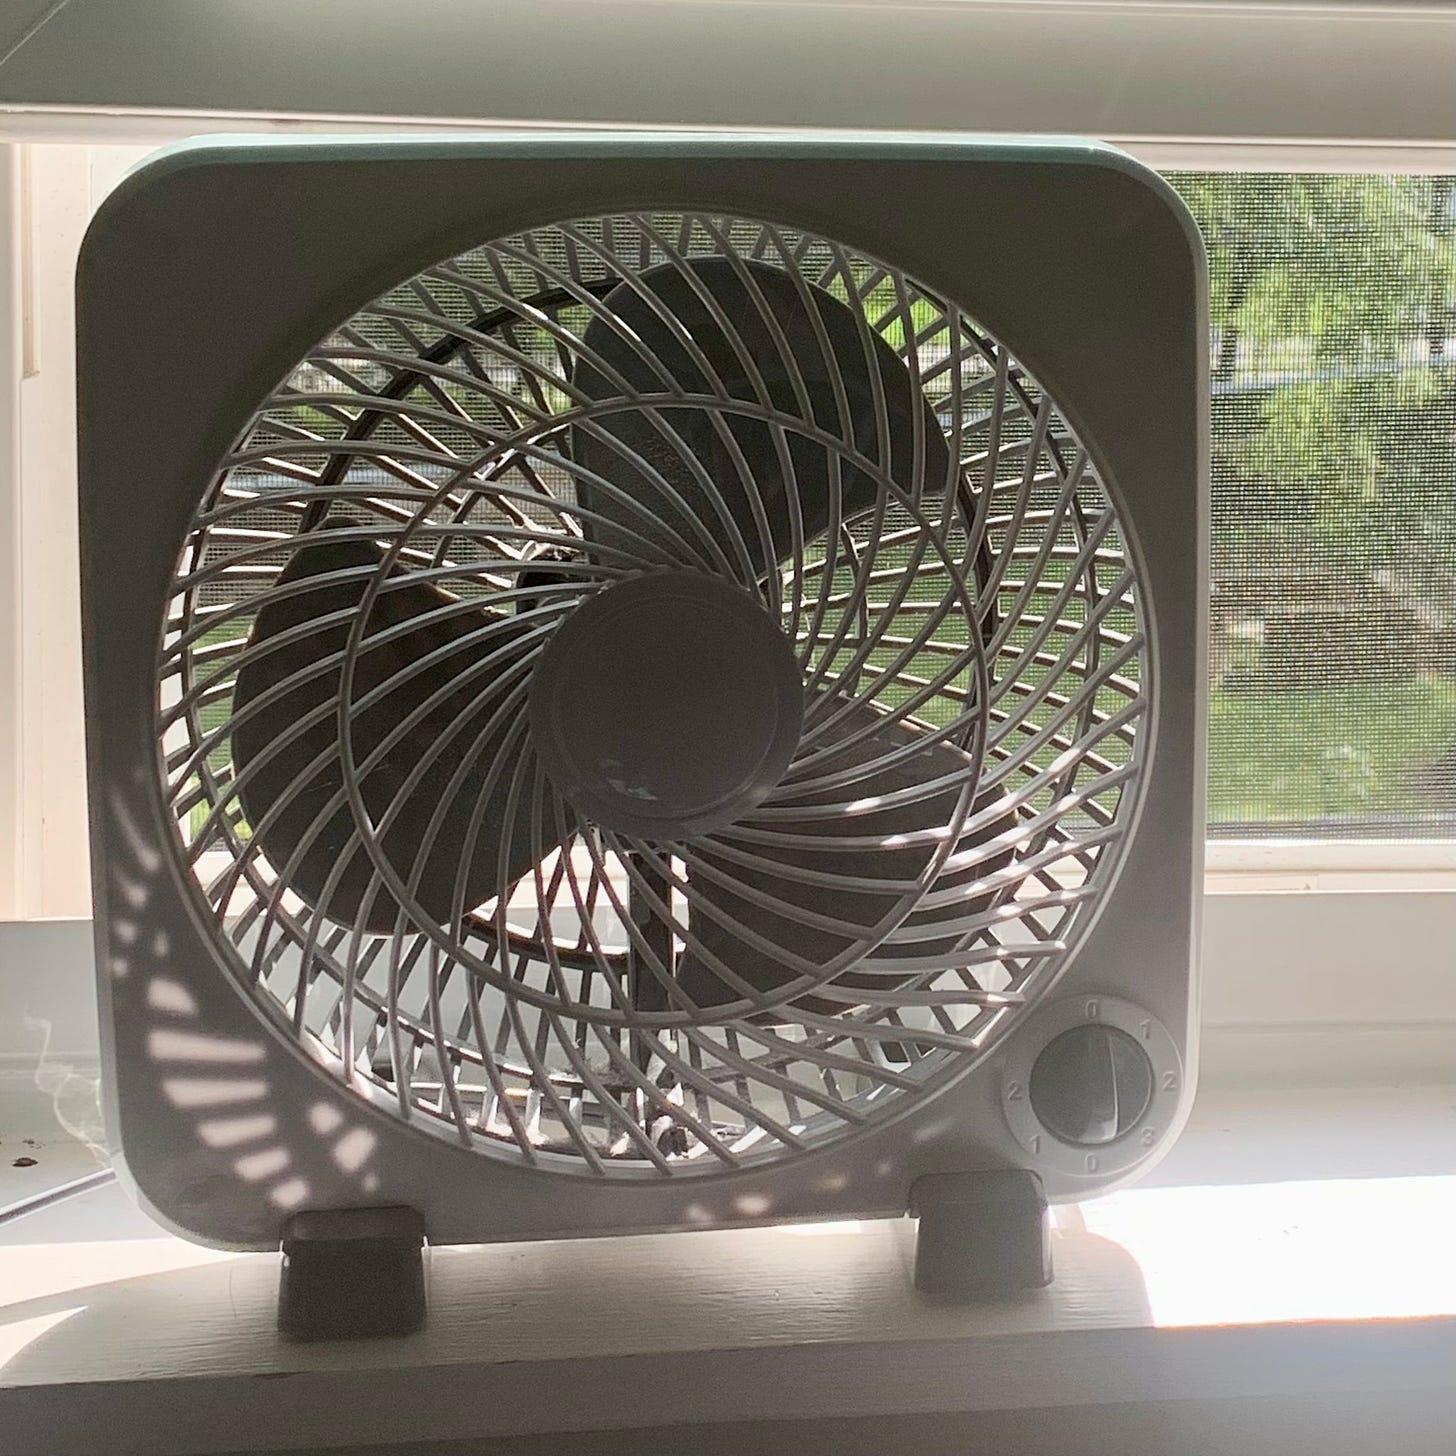 A small box fan on a window sill.